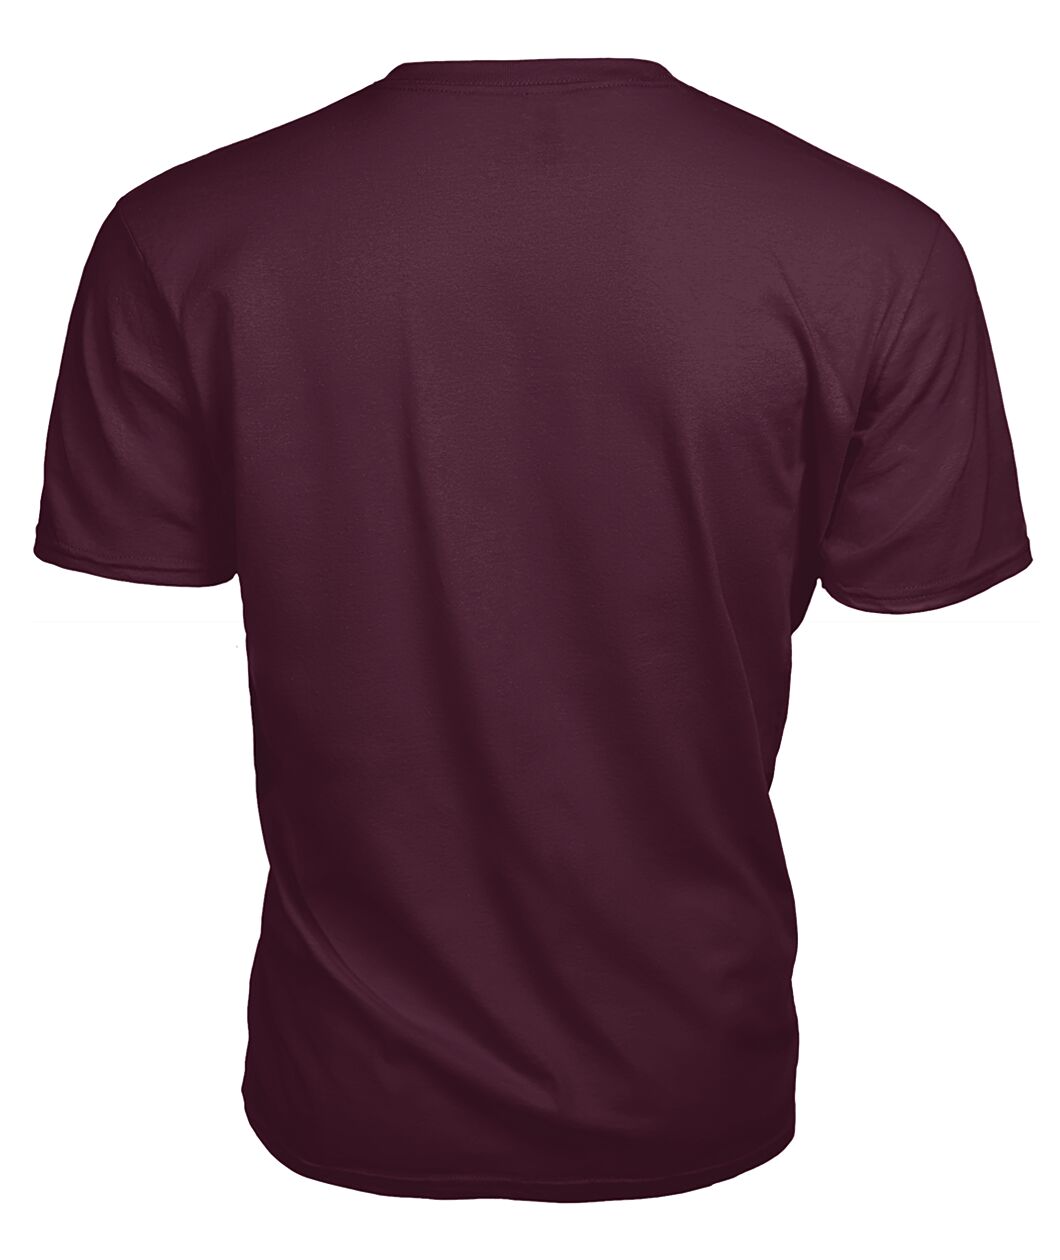 Brodie Family Tartan - 2D T-shirt